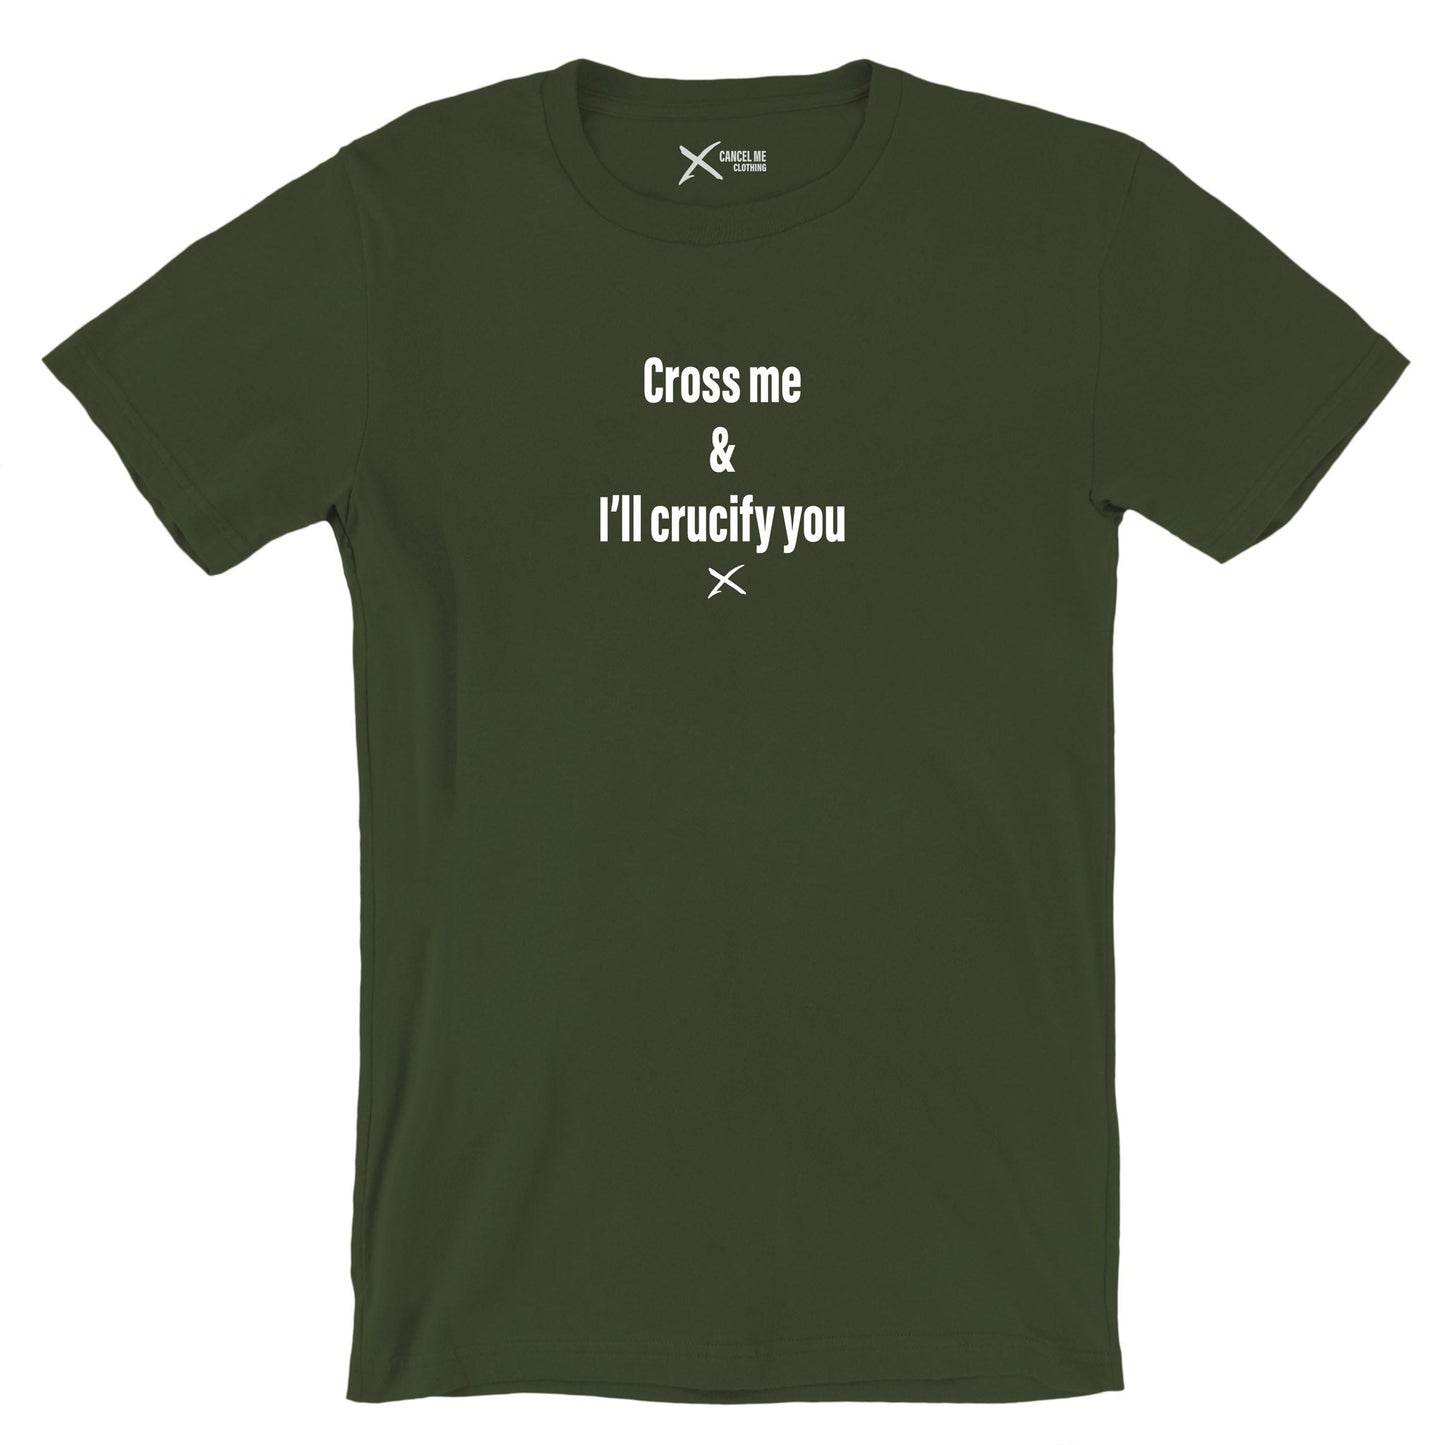 Cross me & I'll crucify you - Shirt